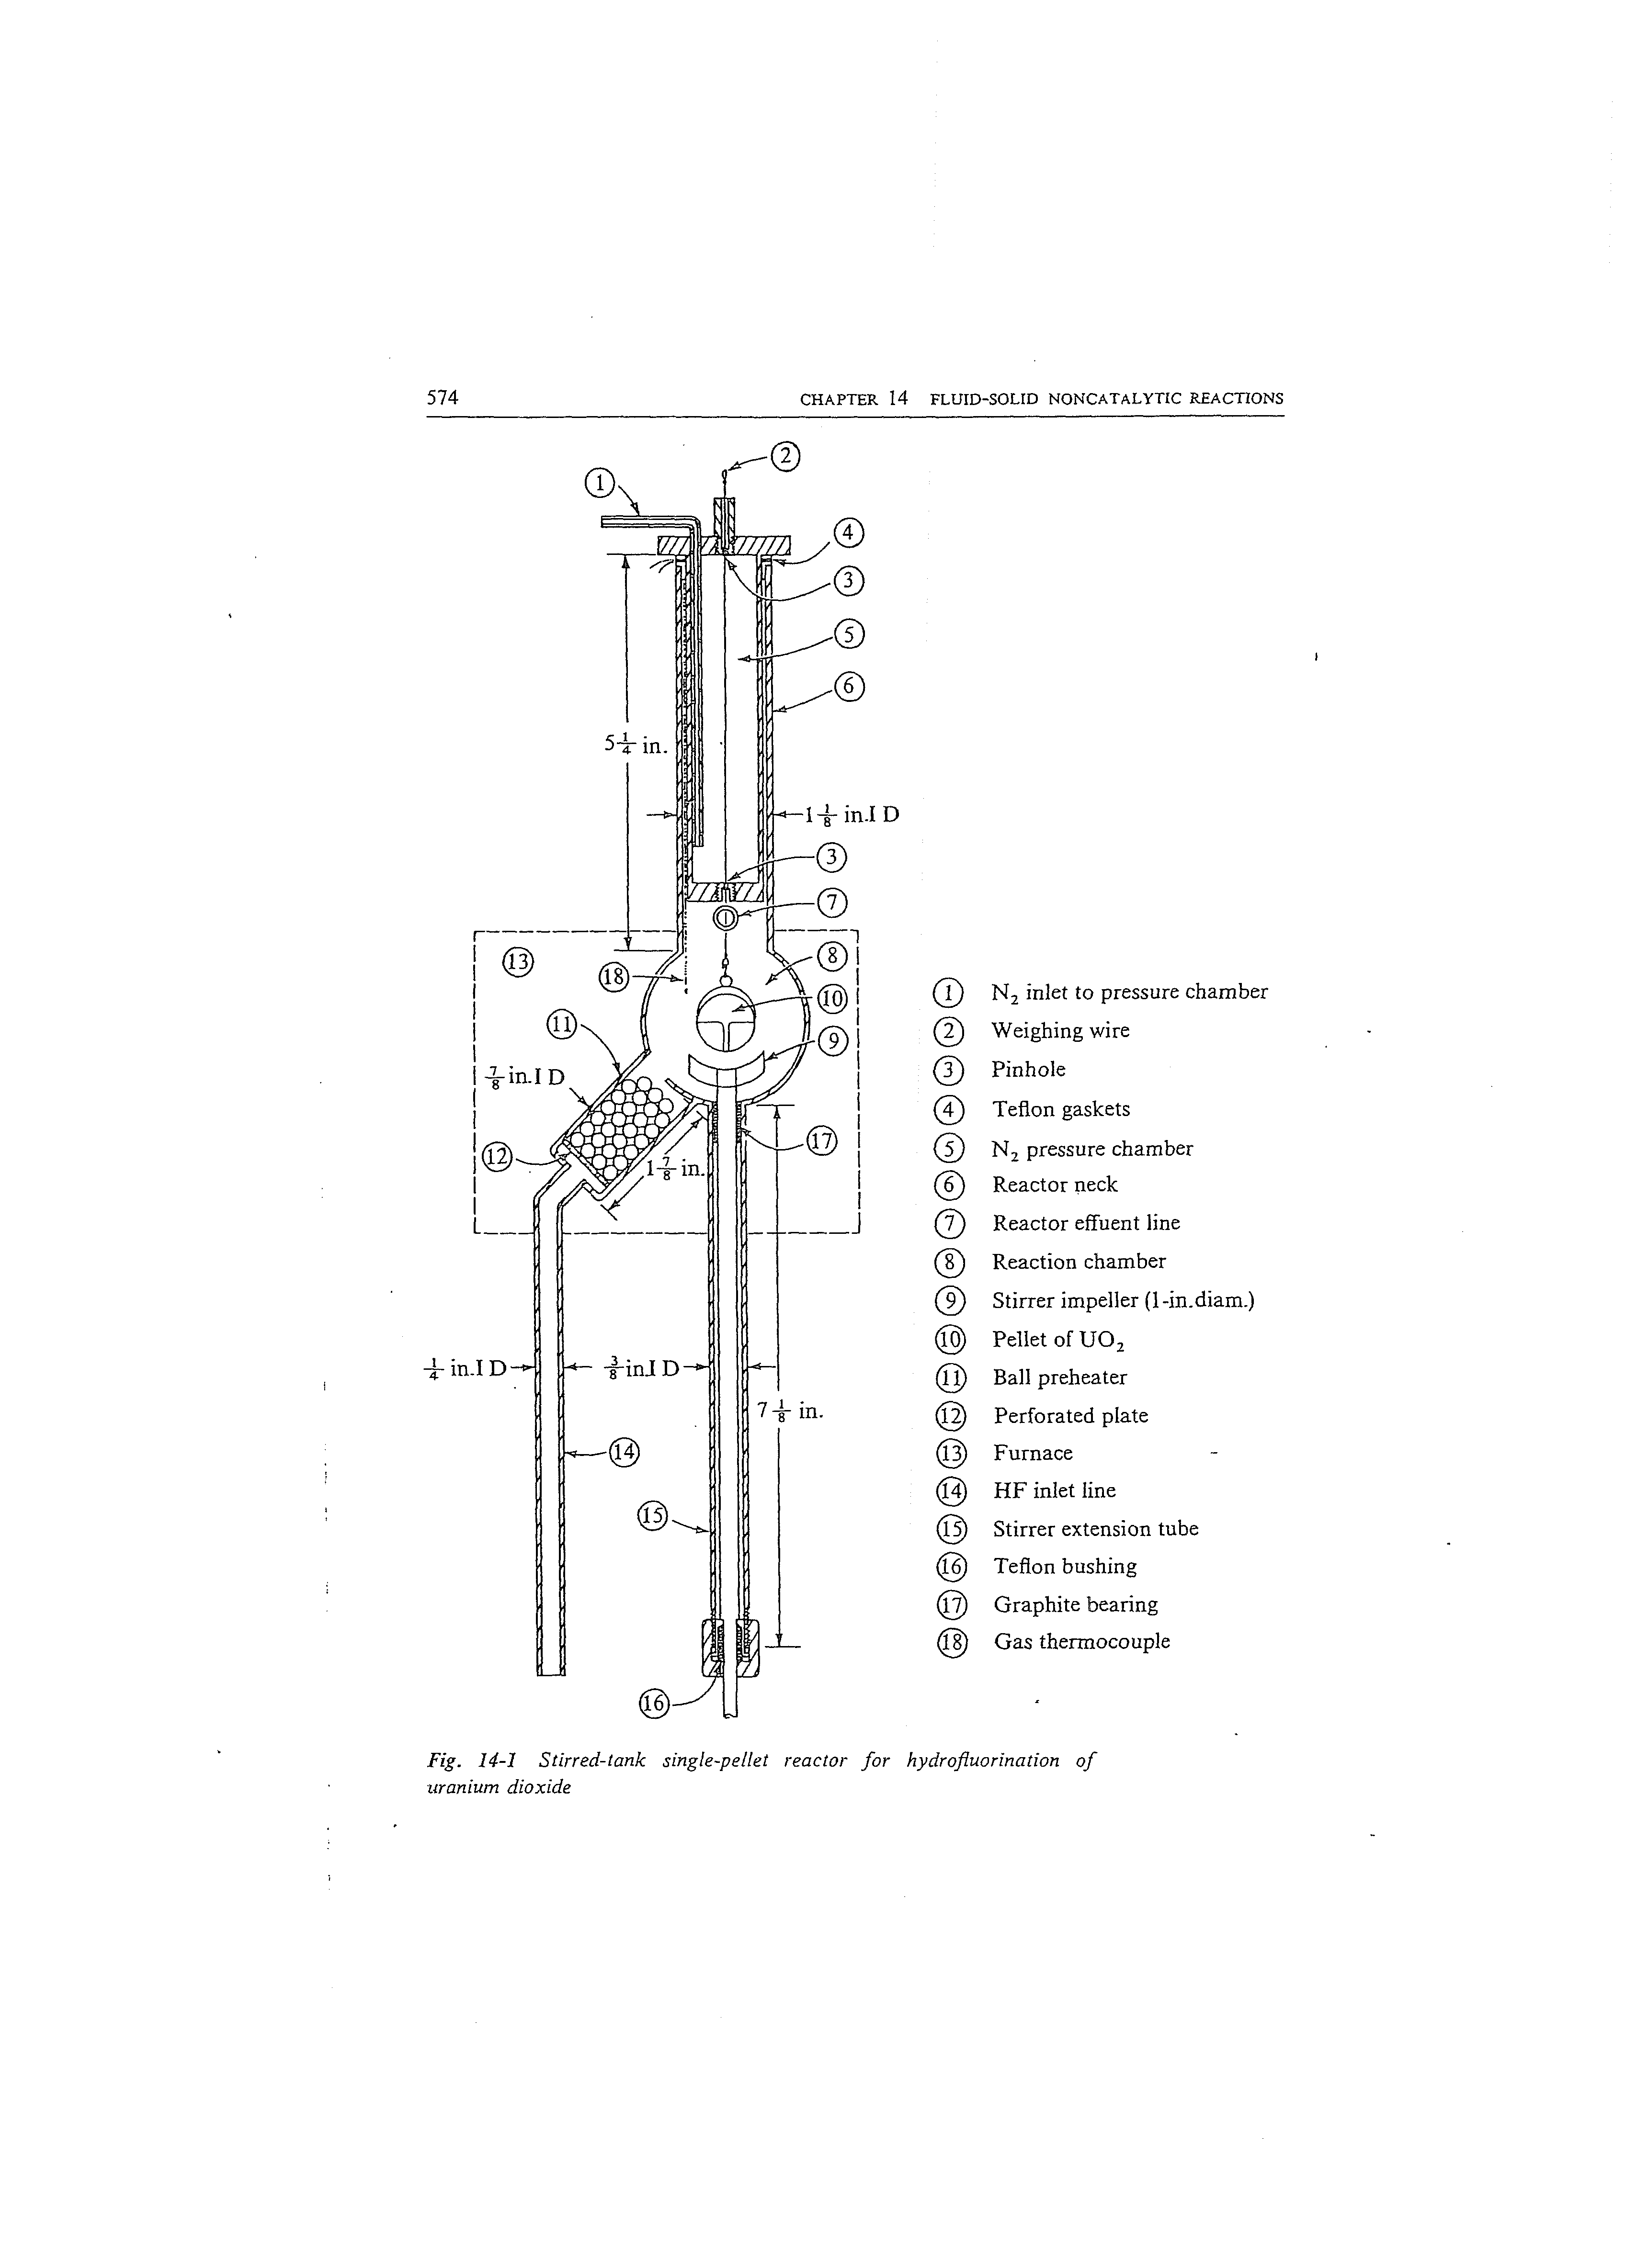 Fig. 14-1 Stirred-tank single-pellet reactor for hydrofluorination of uranium dioxide...